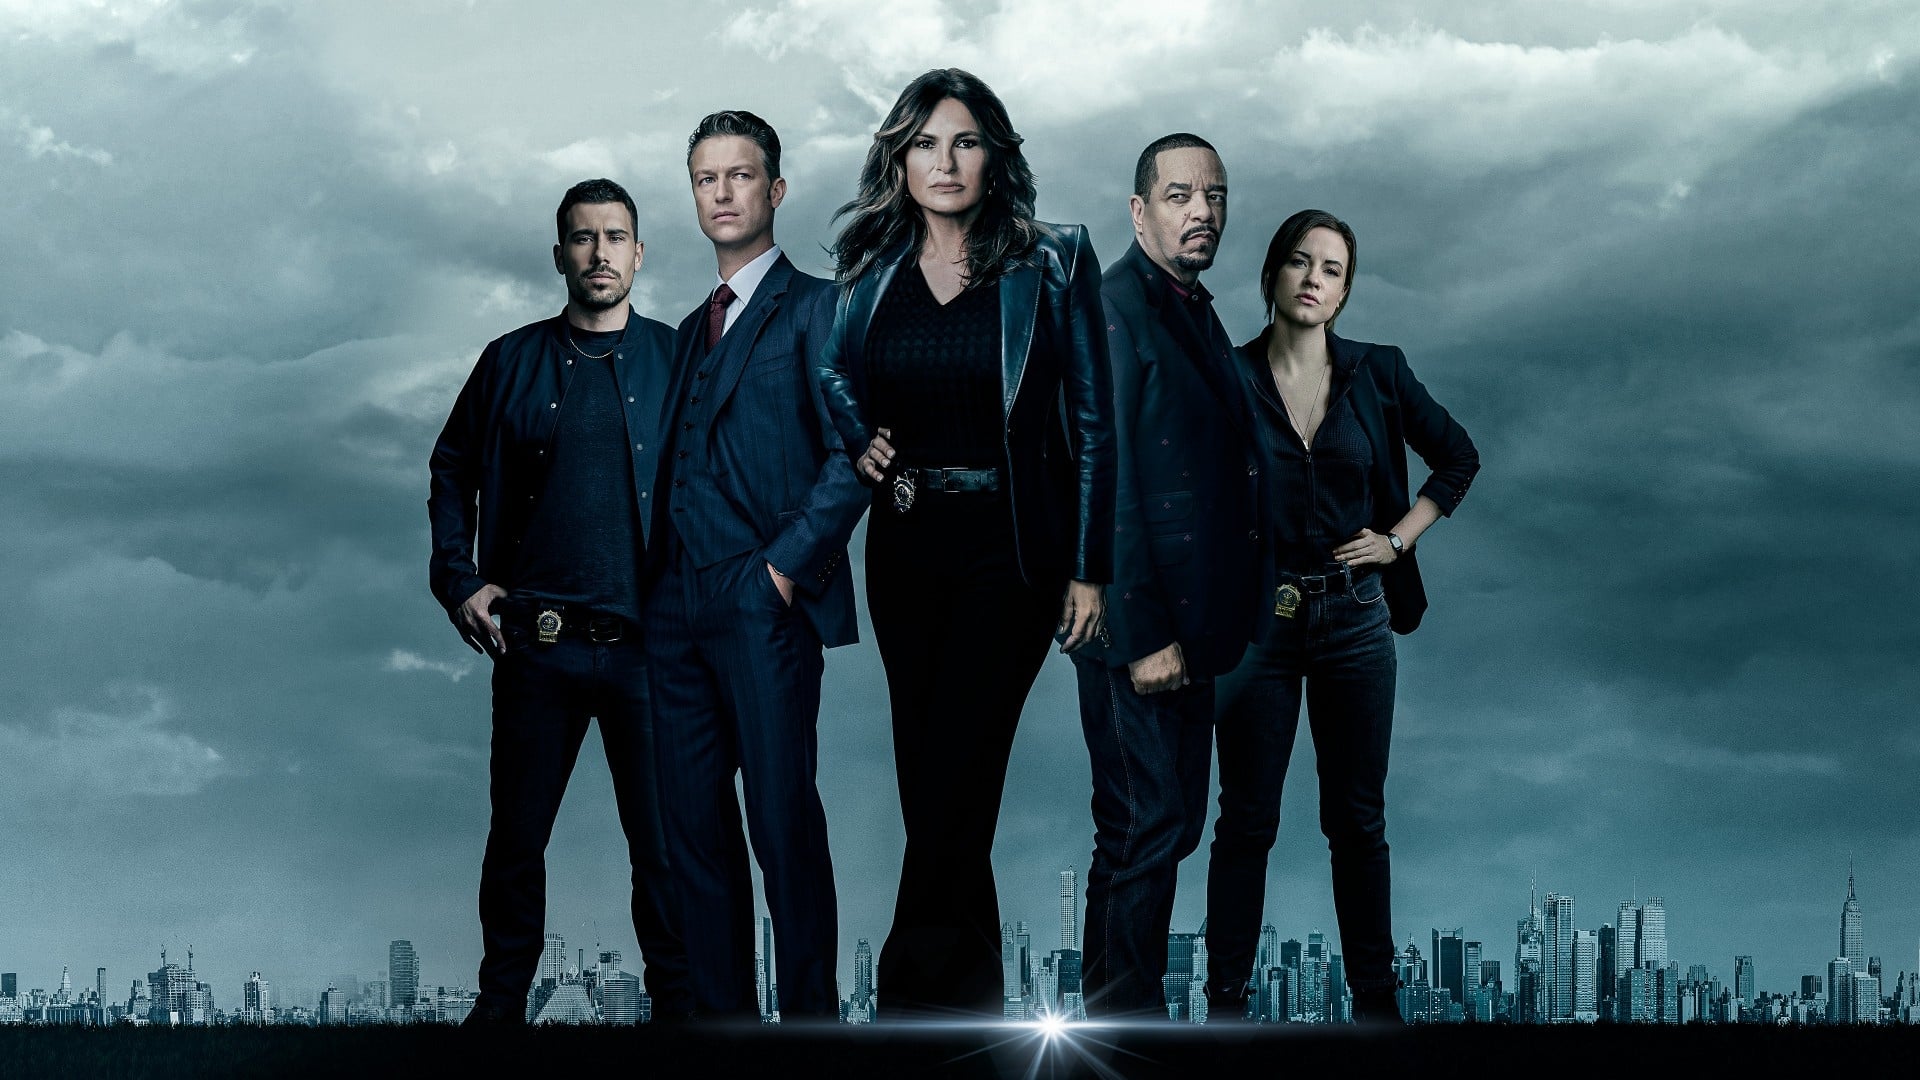 Law & Order: Special Victims Unit - Season 3 Episode 4